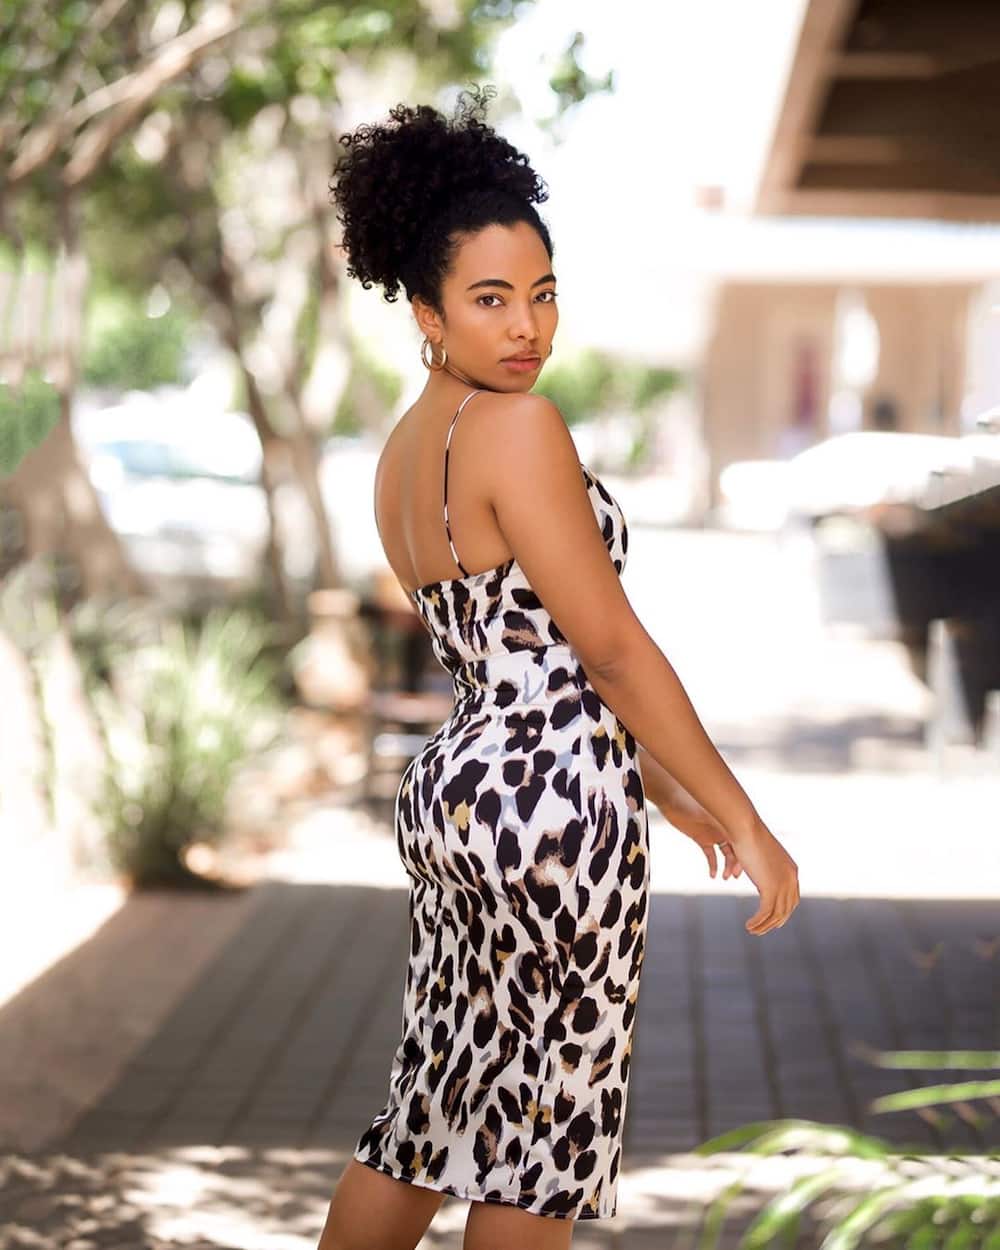 Who are Mzansi TOP video vixens? - Briefly.co.za